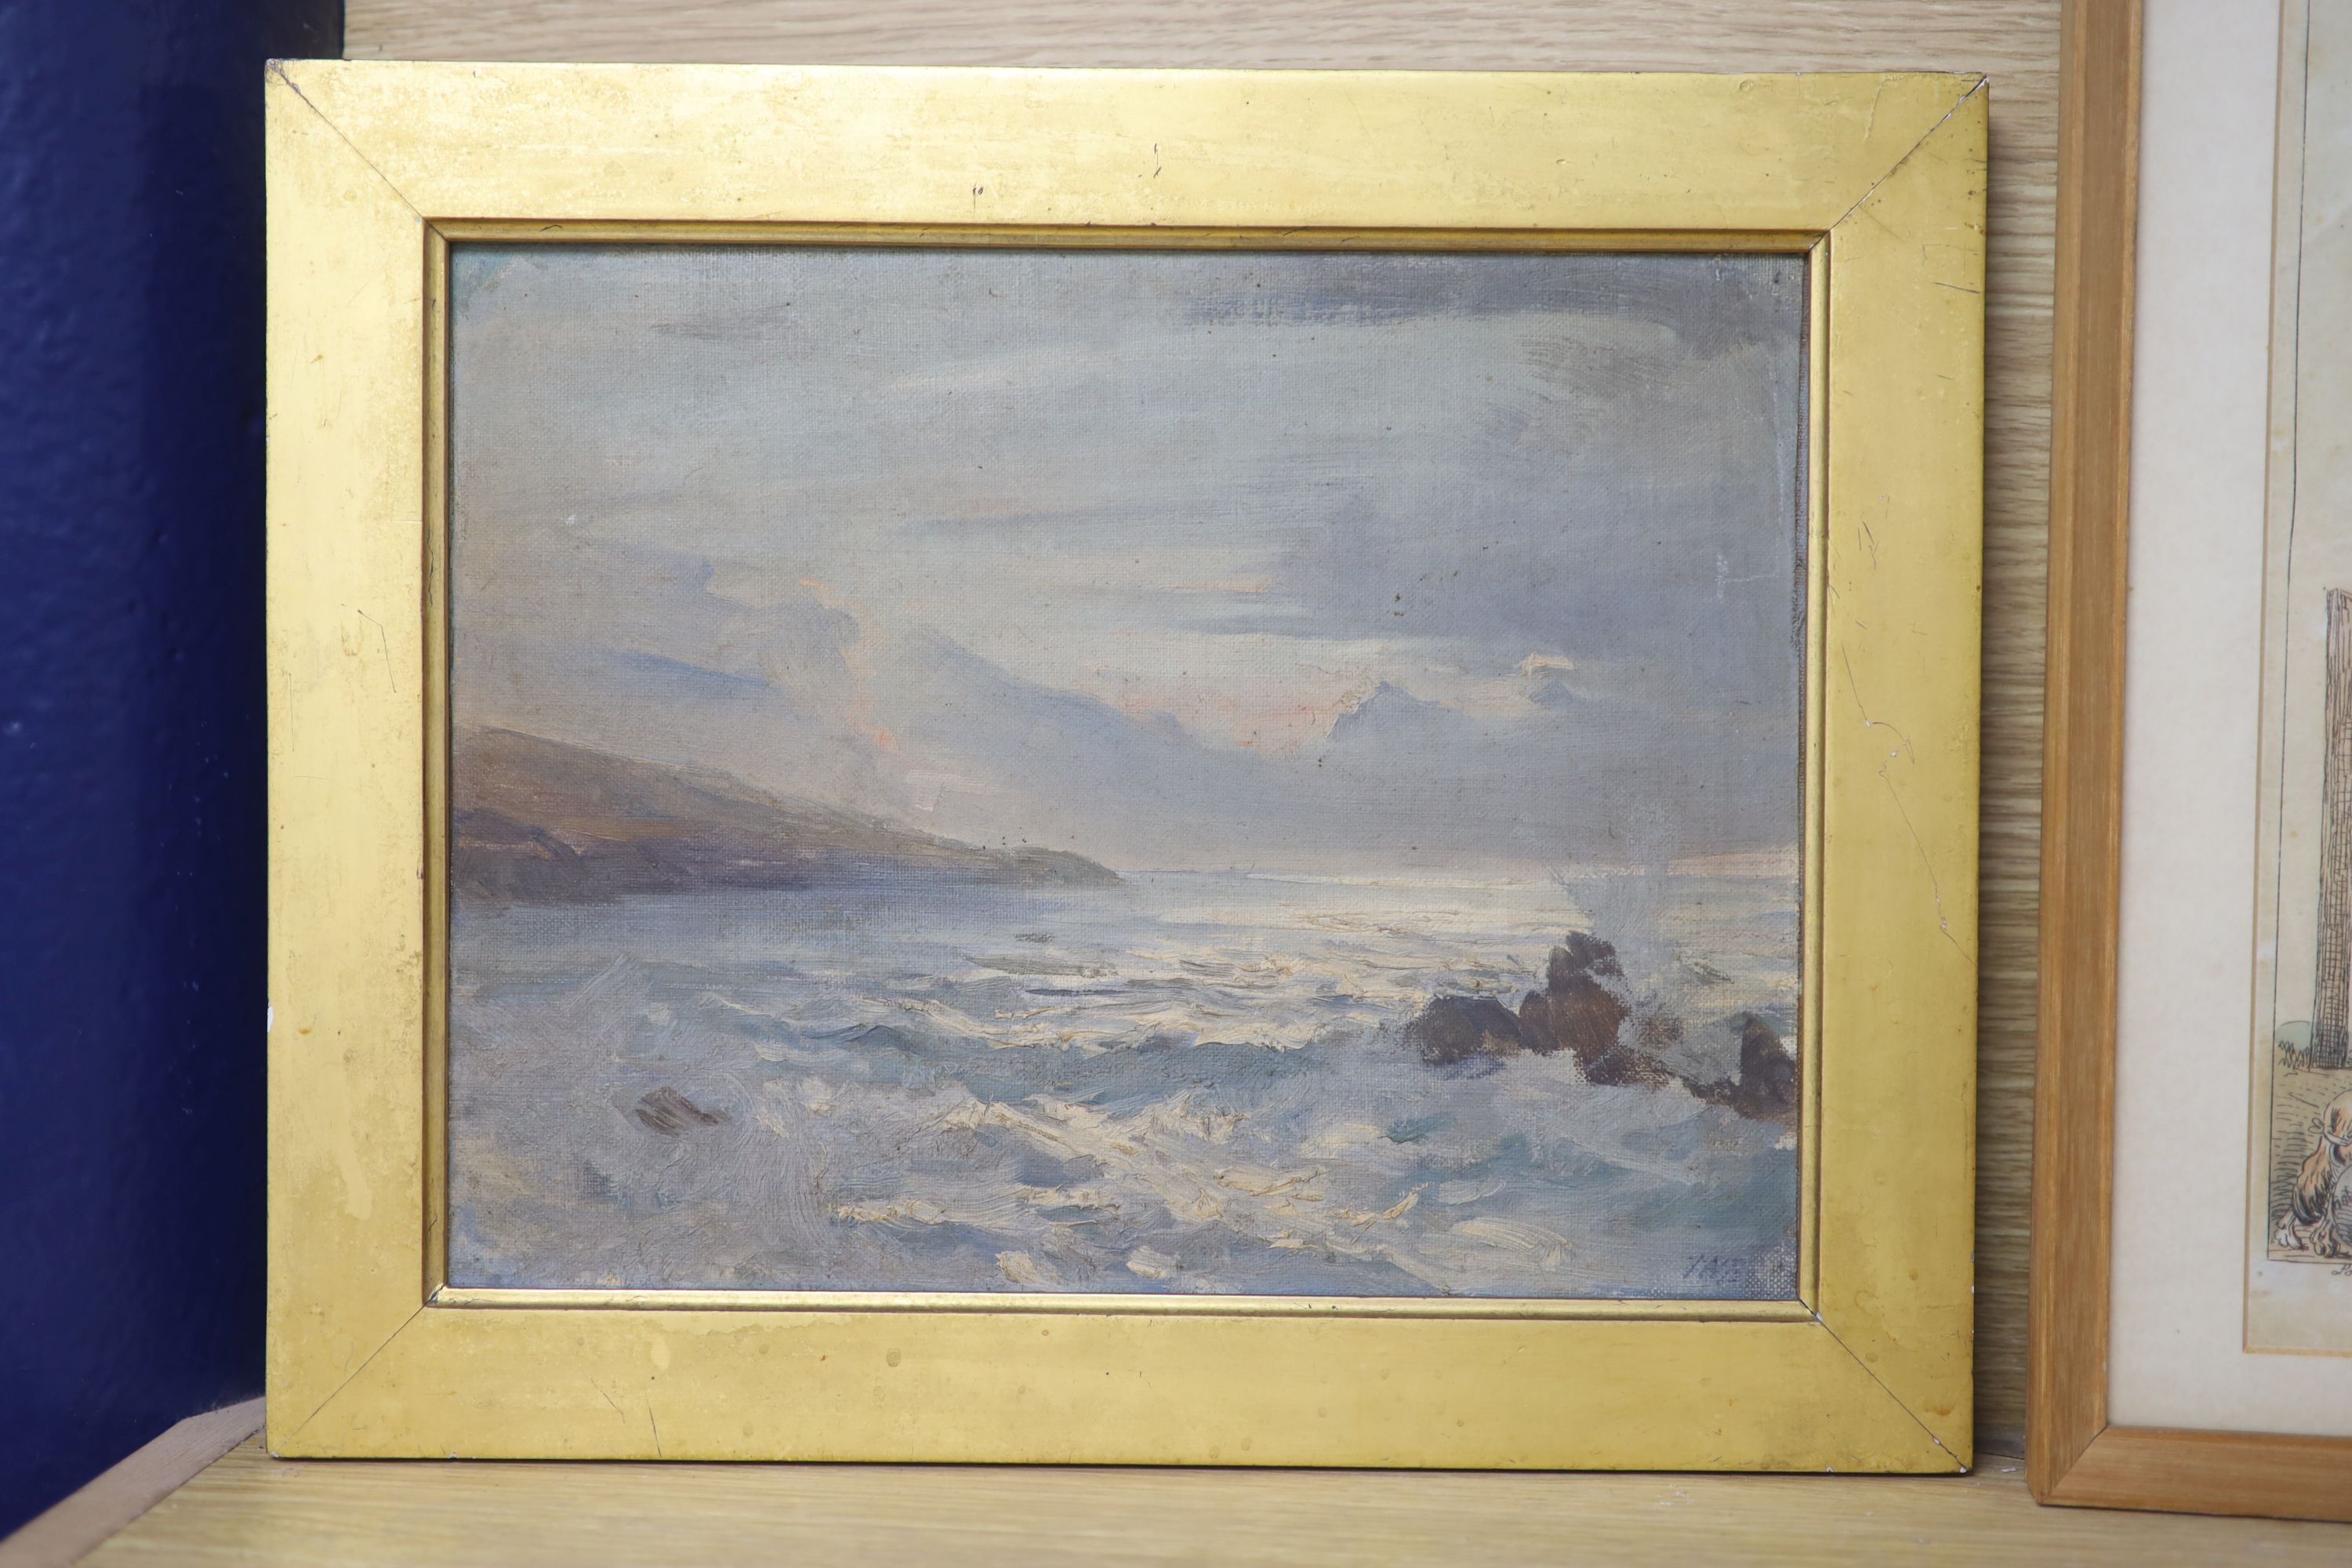 J.H. Bland (1893), oil on canvas, Coastal landscape, initialled, 23 x 30cm